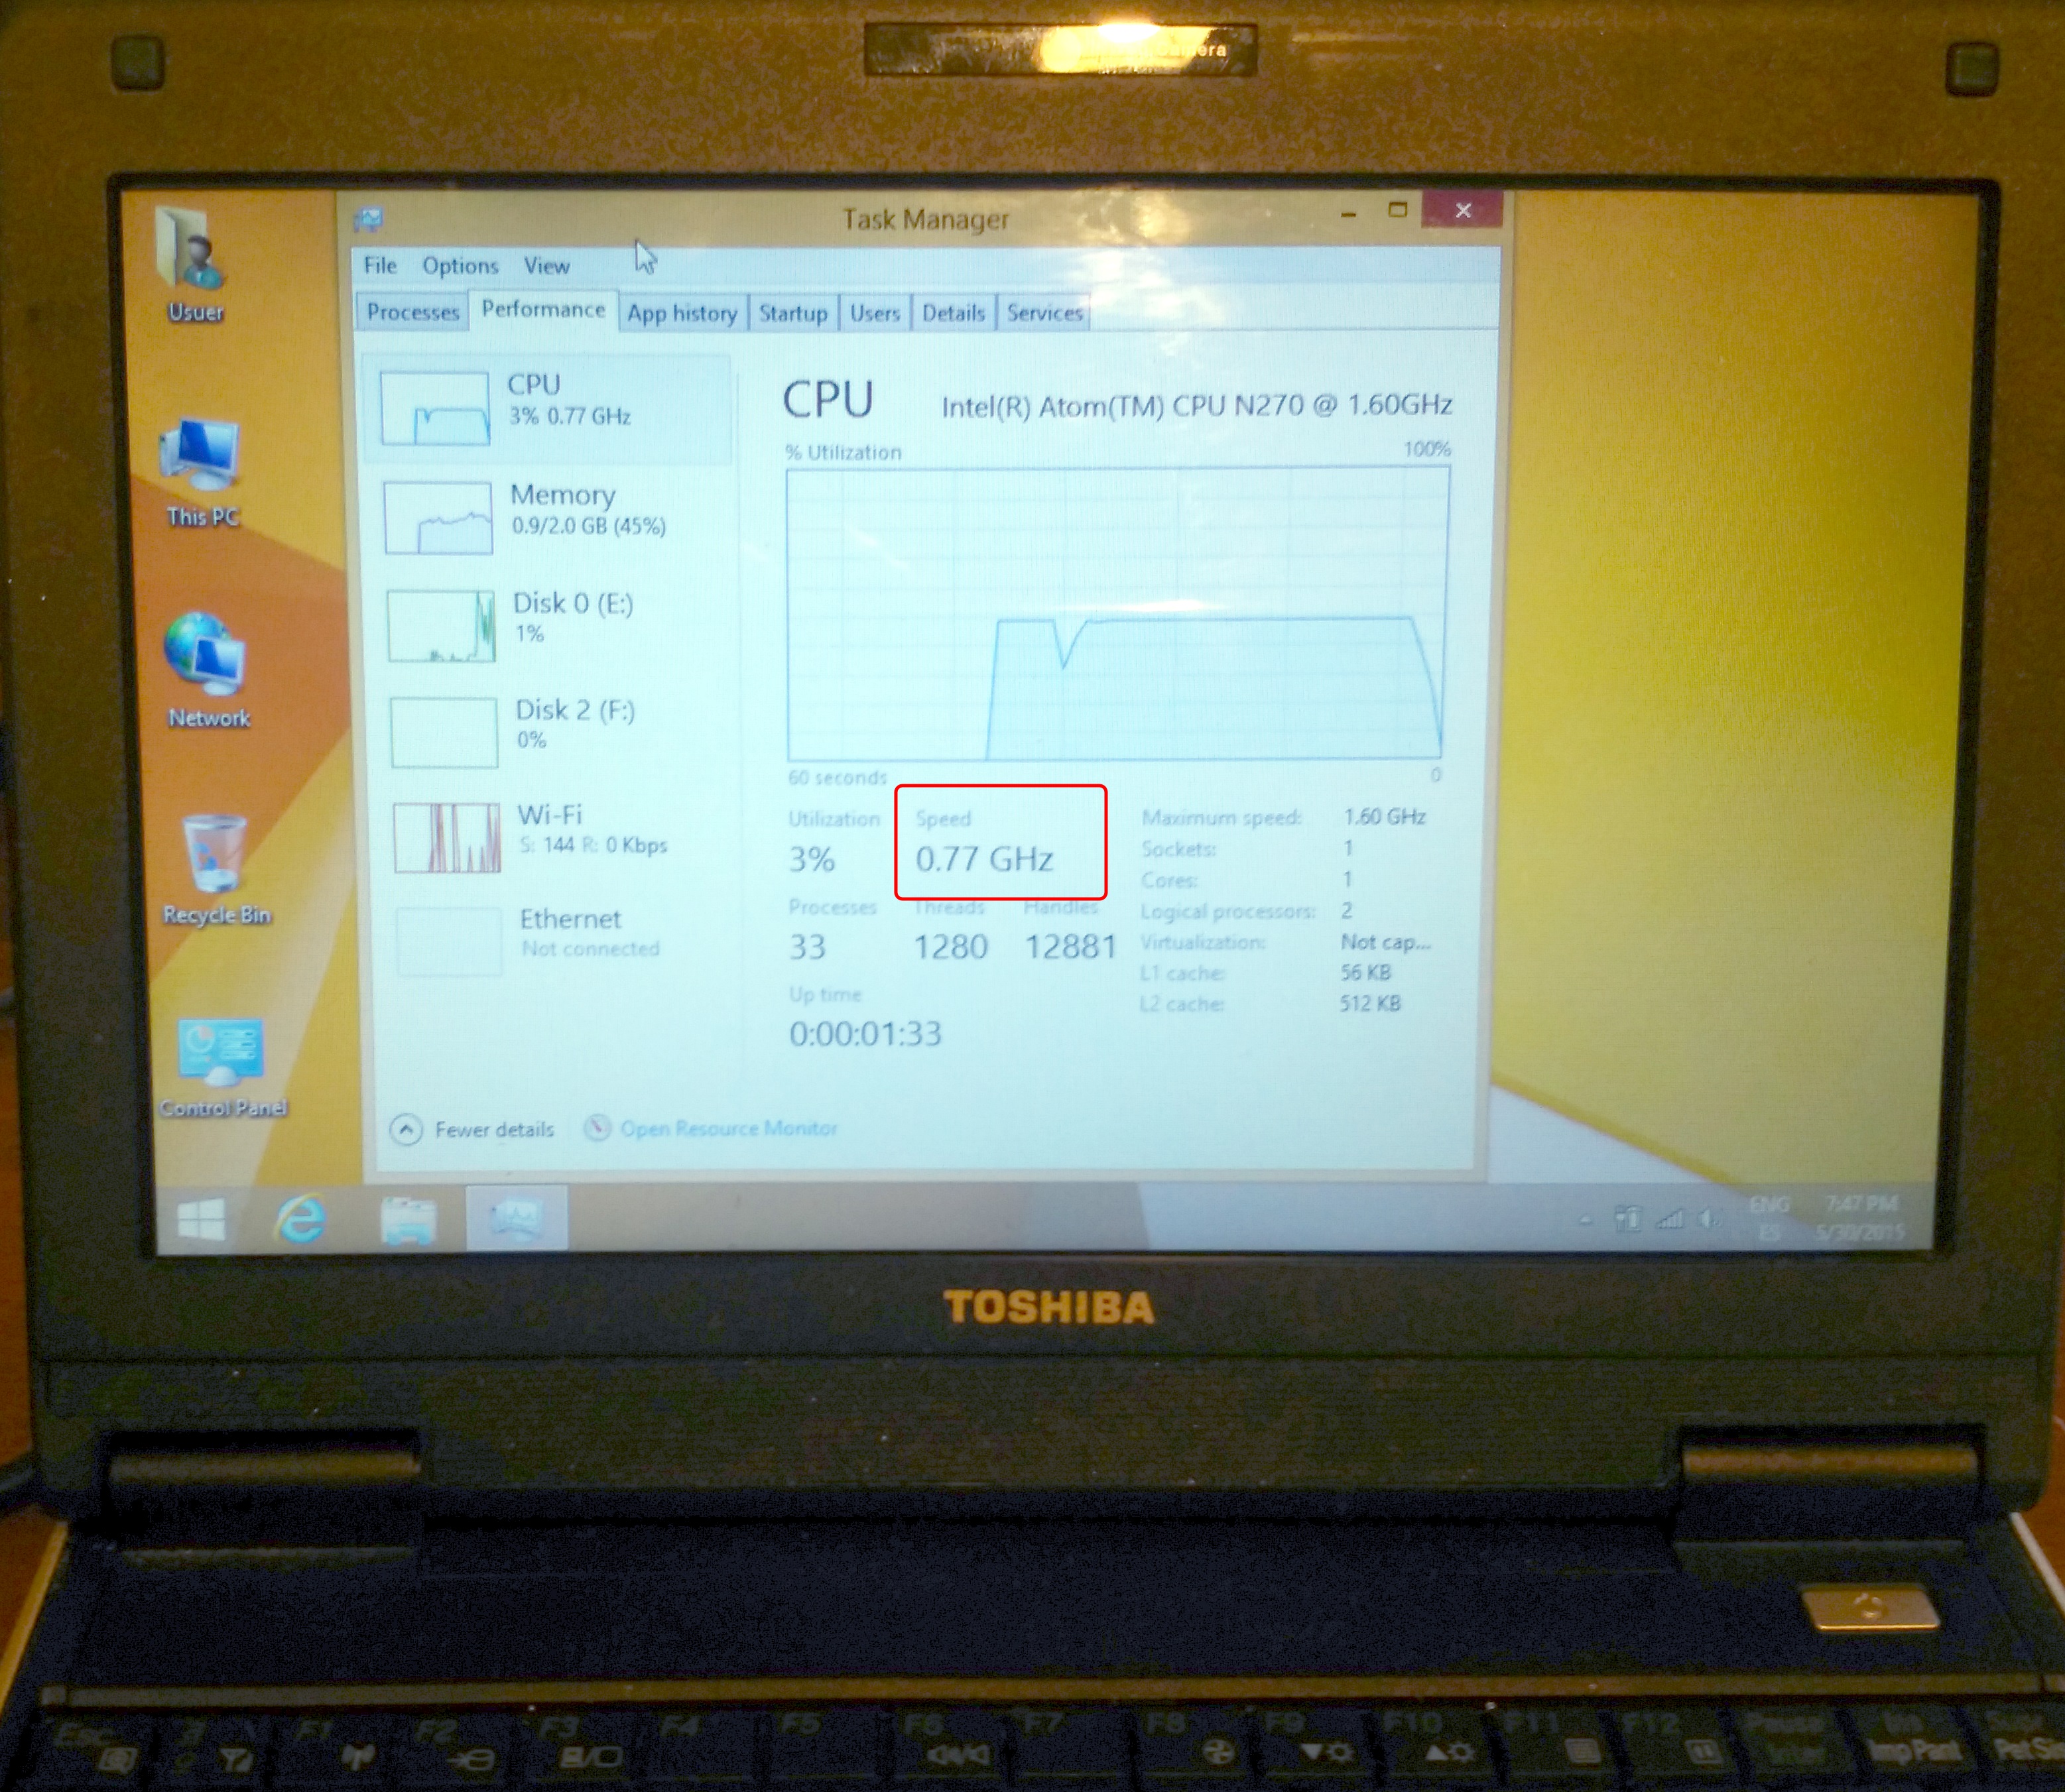 Assimilatie Teleurgesteld voorzien Windows 10 y Windows 8.1 en un Netbook (Atom N270) Rendimiento CPU – Abraza  la Web